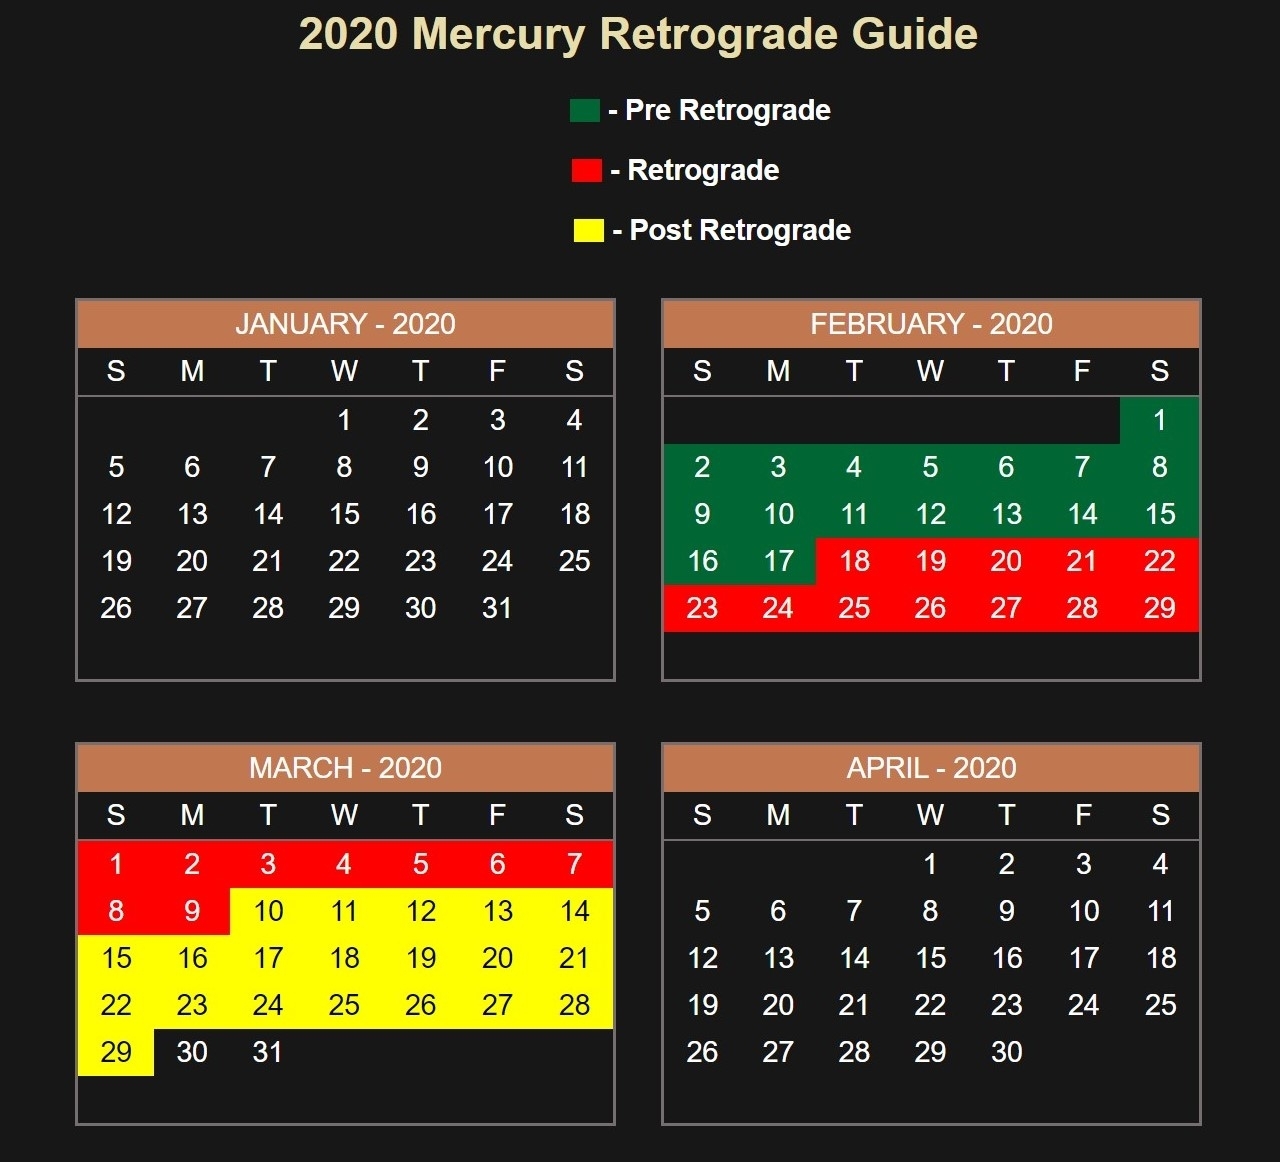 mercury retrograde 2021